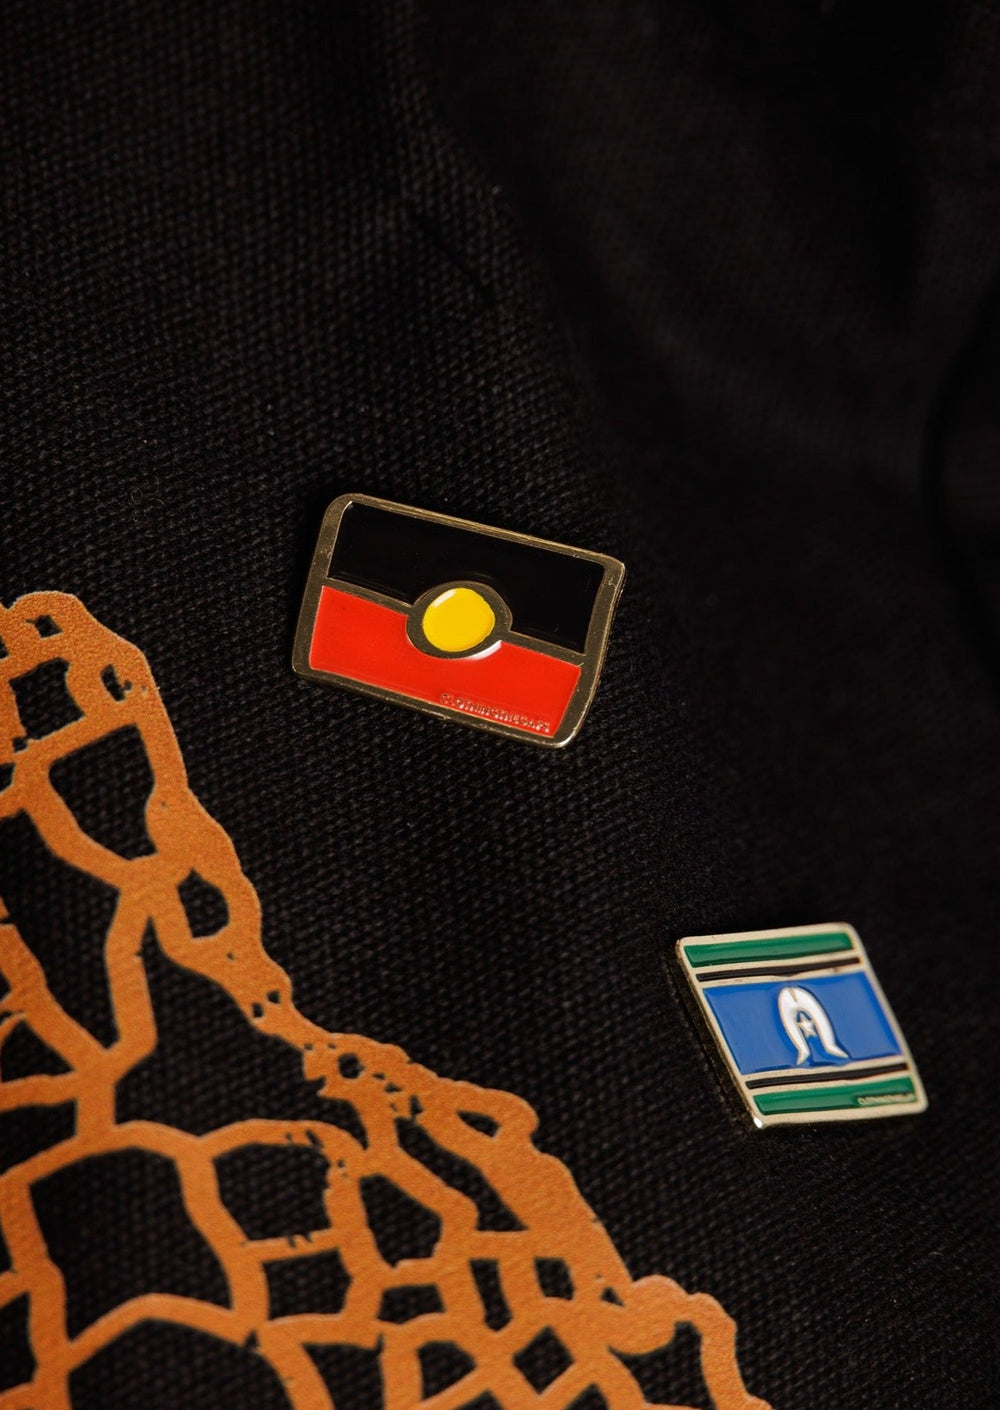 Torres Strait Islander Flag Pin